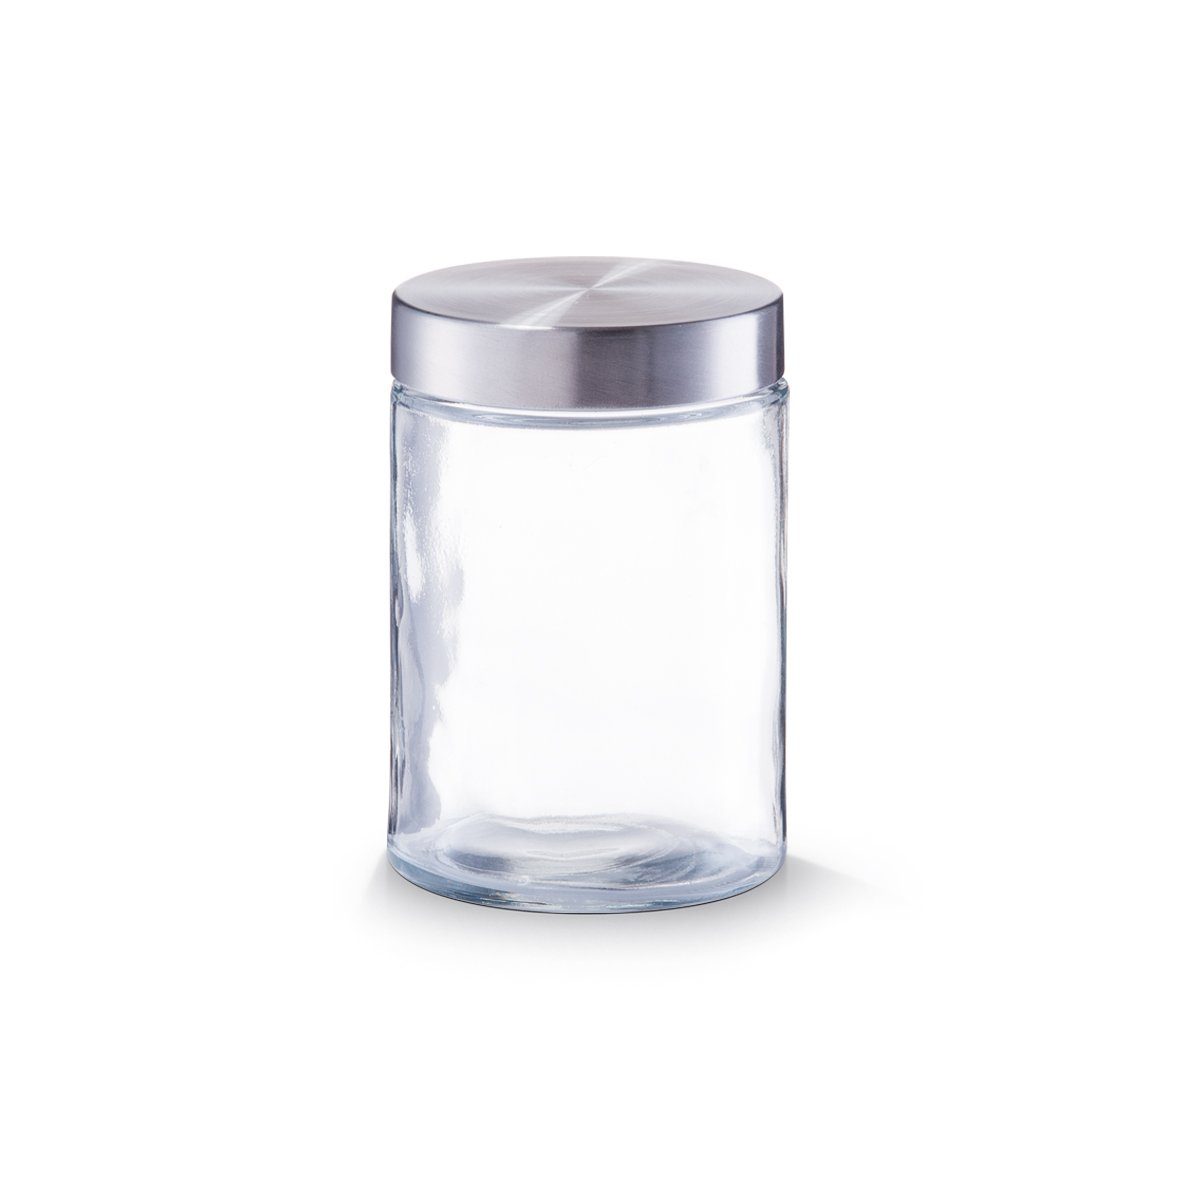 Ø11 16,5 Glas/Edelstahl, transparent, Present 1160 Vorratsglas Zeller m. Glas/Edelstahl, Vorratsglas cm Edelstahldeckel, x ml, 1100 ml,